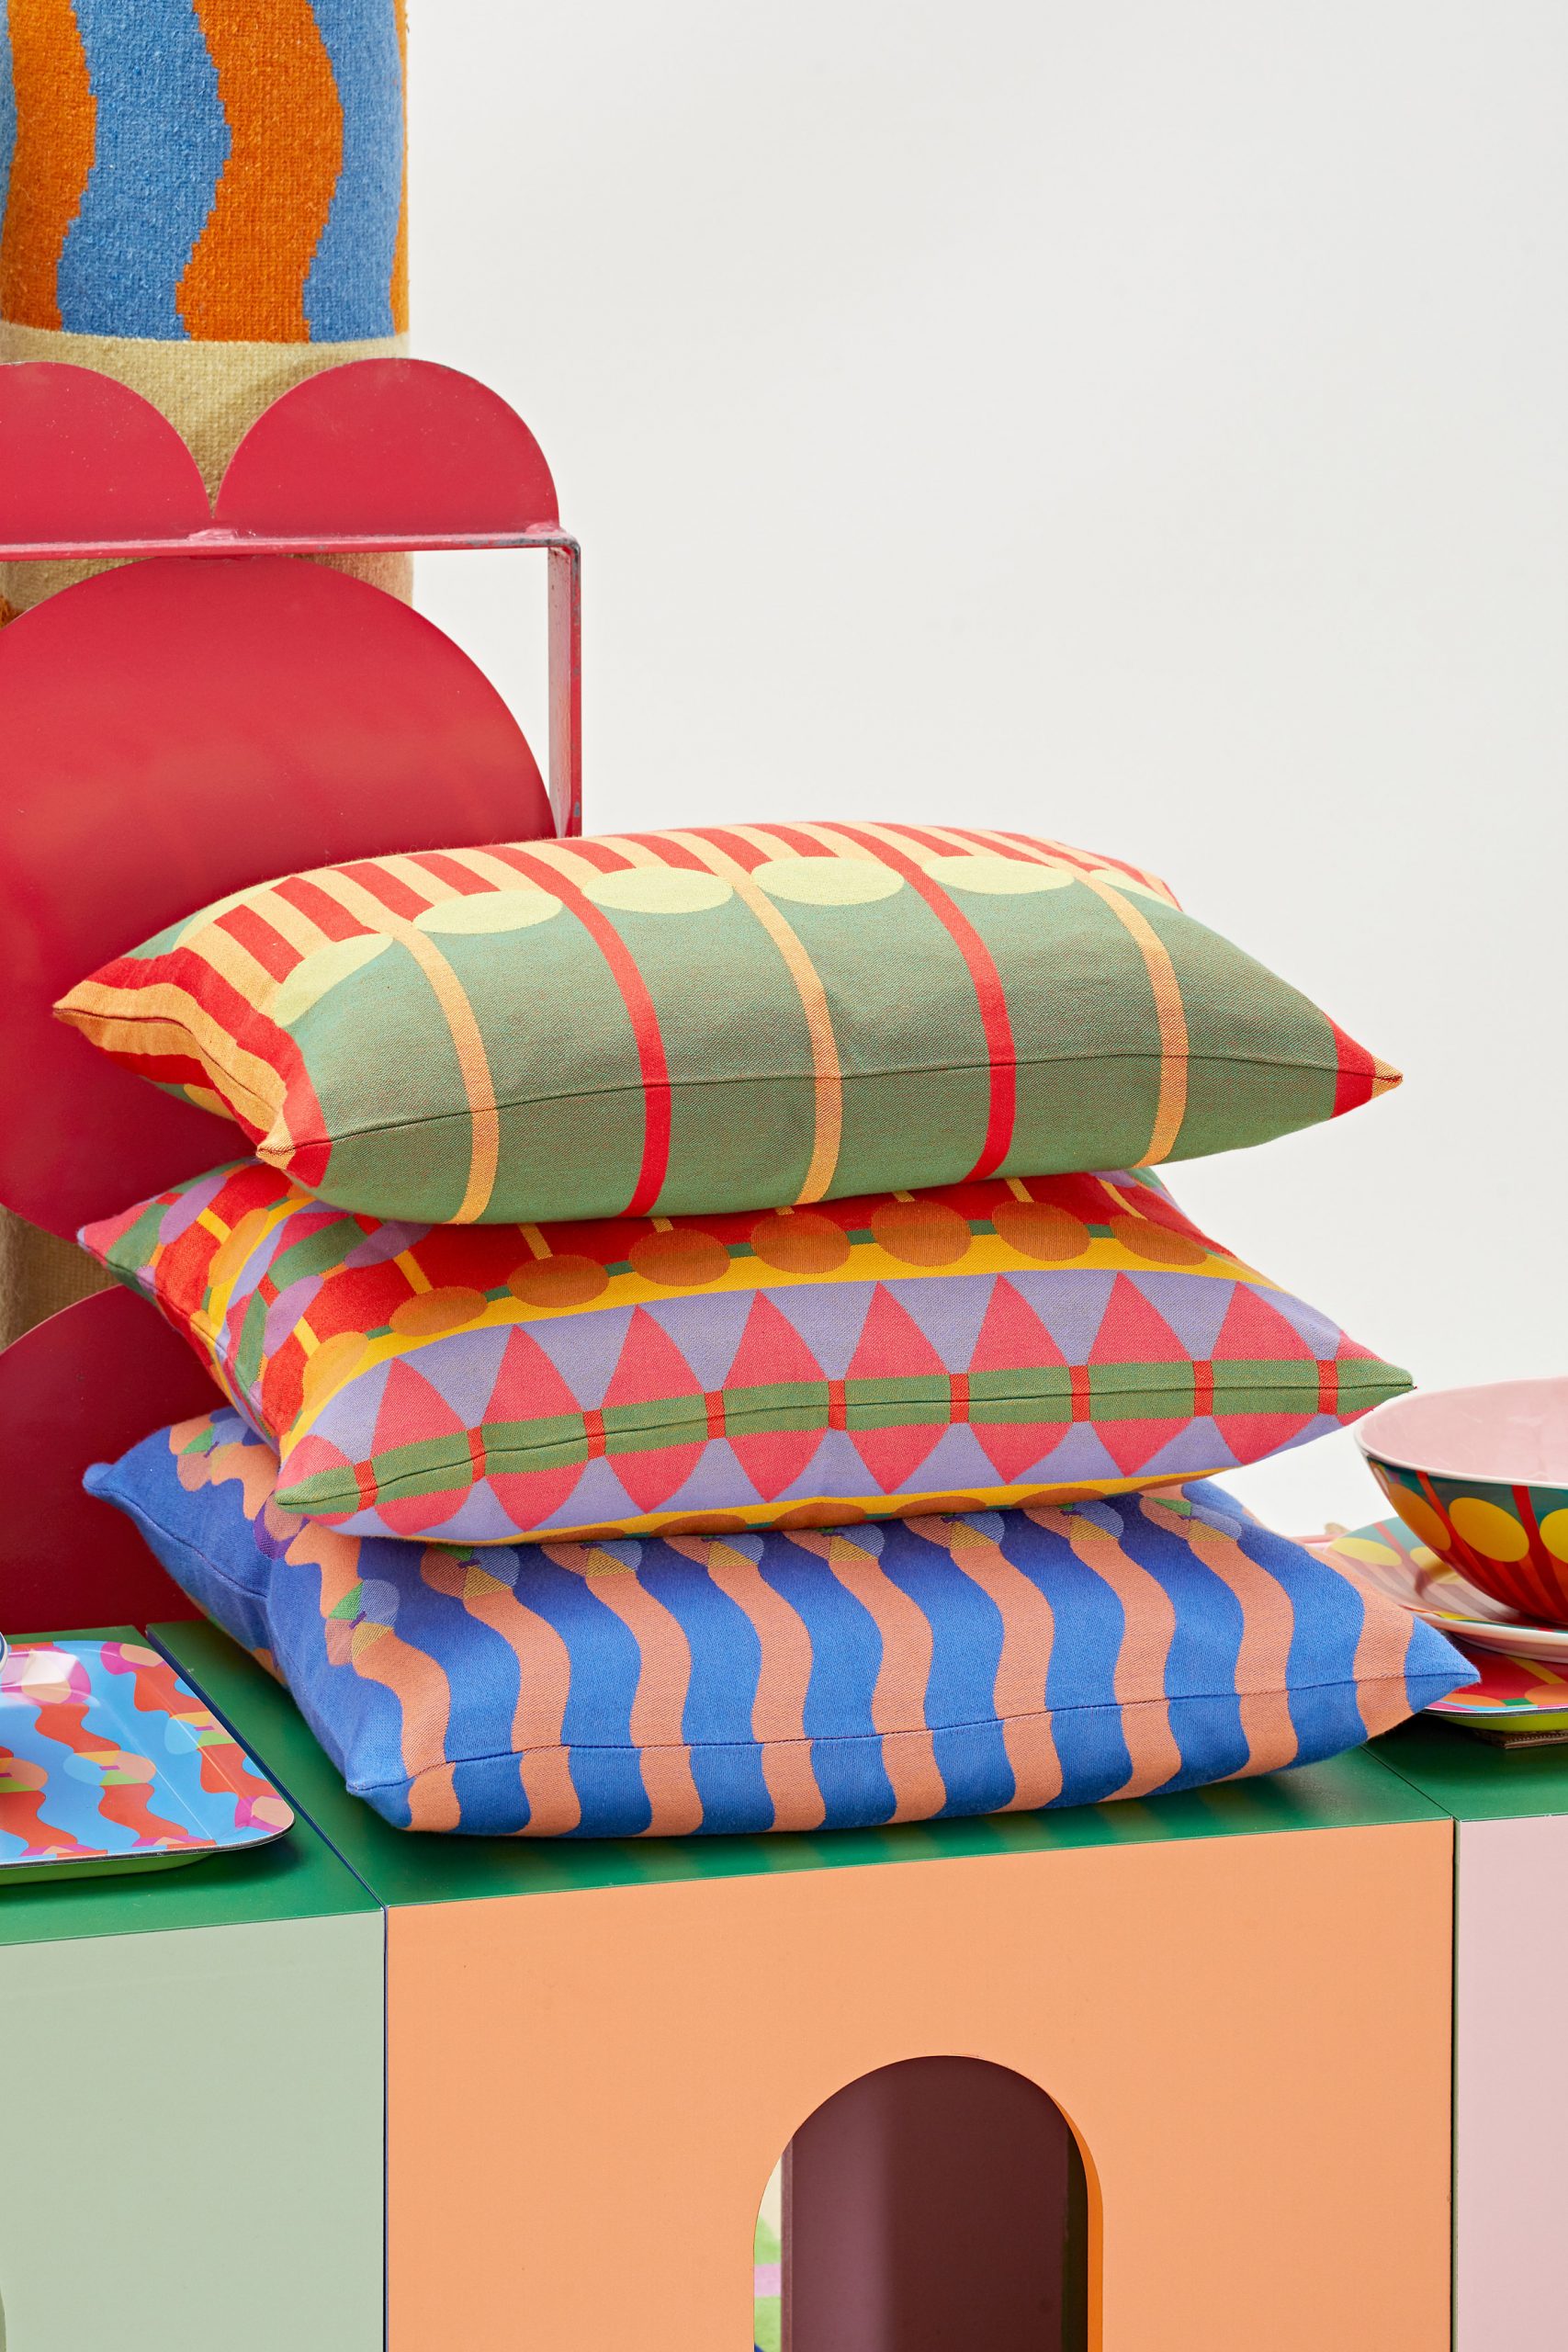 Pillows from Yinka Ilori homeware collection